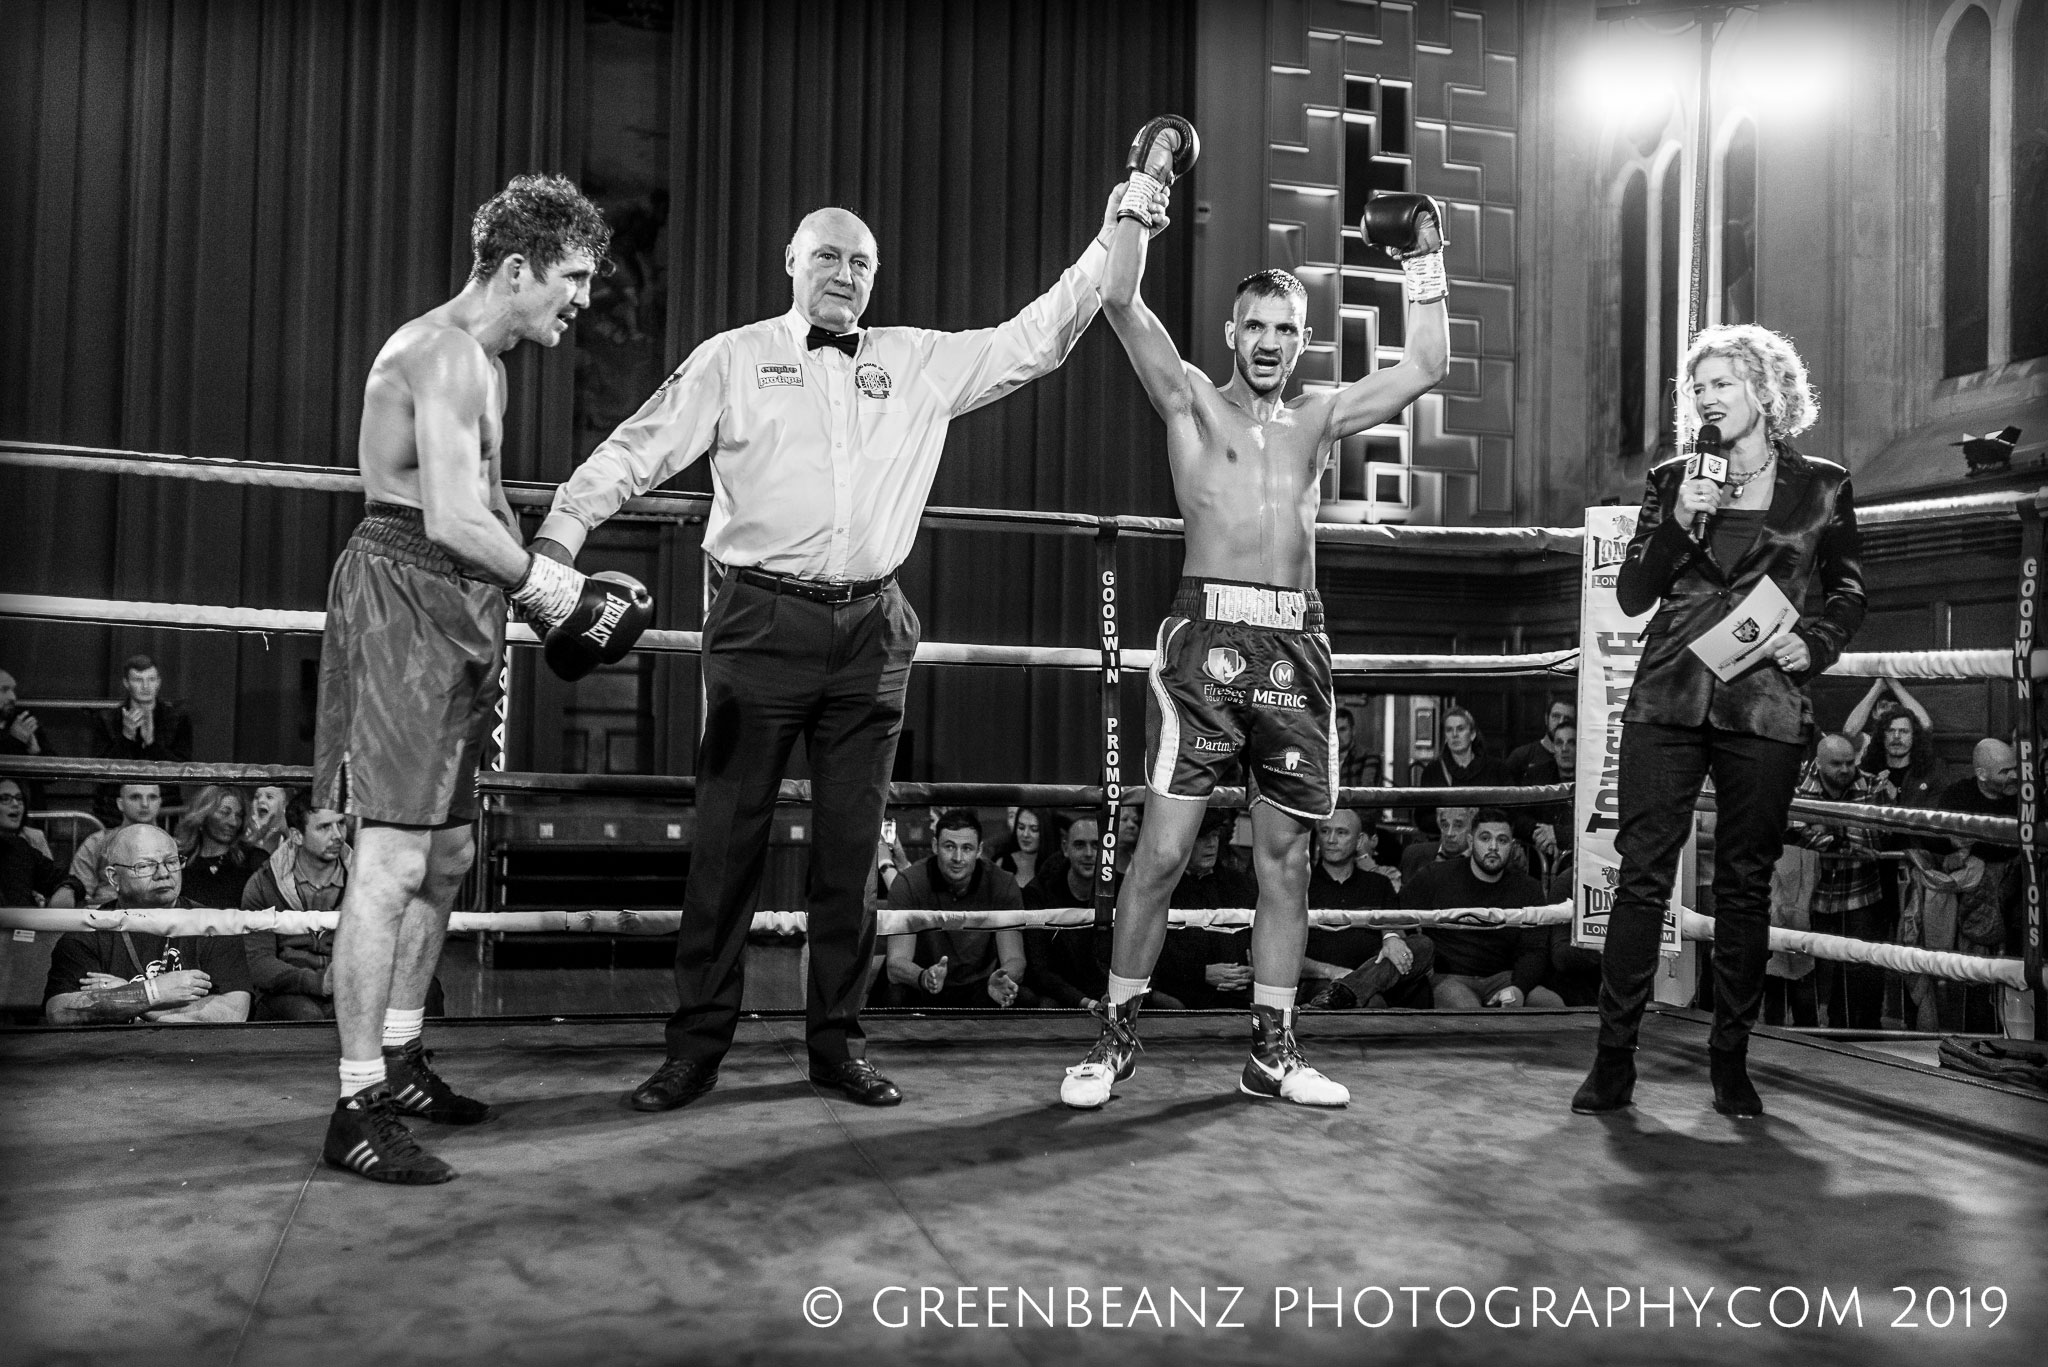 Darren Townley's 10th UK Professional Boxing win